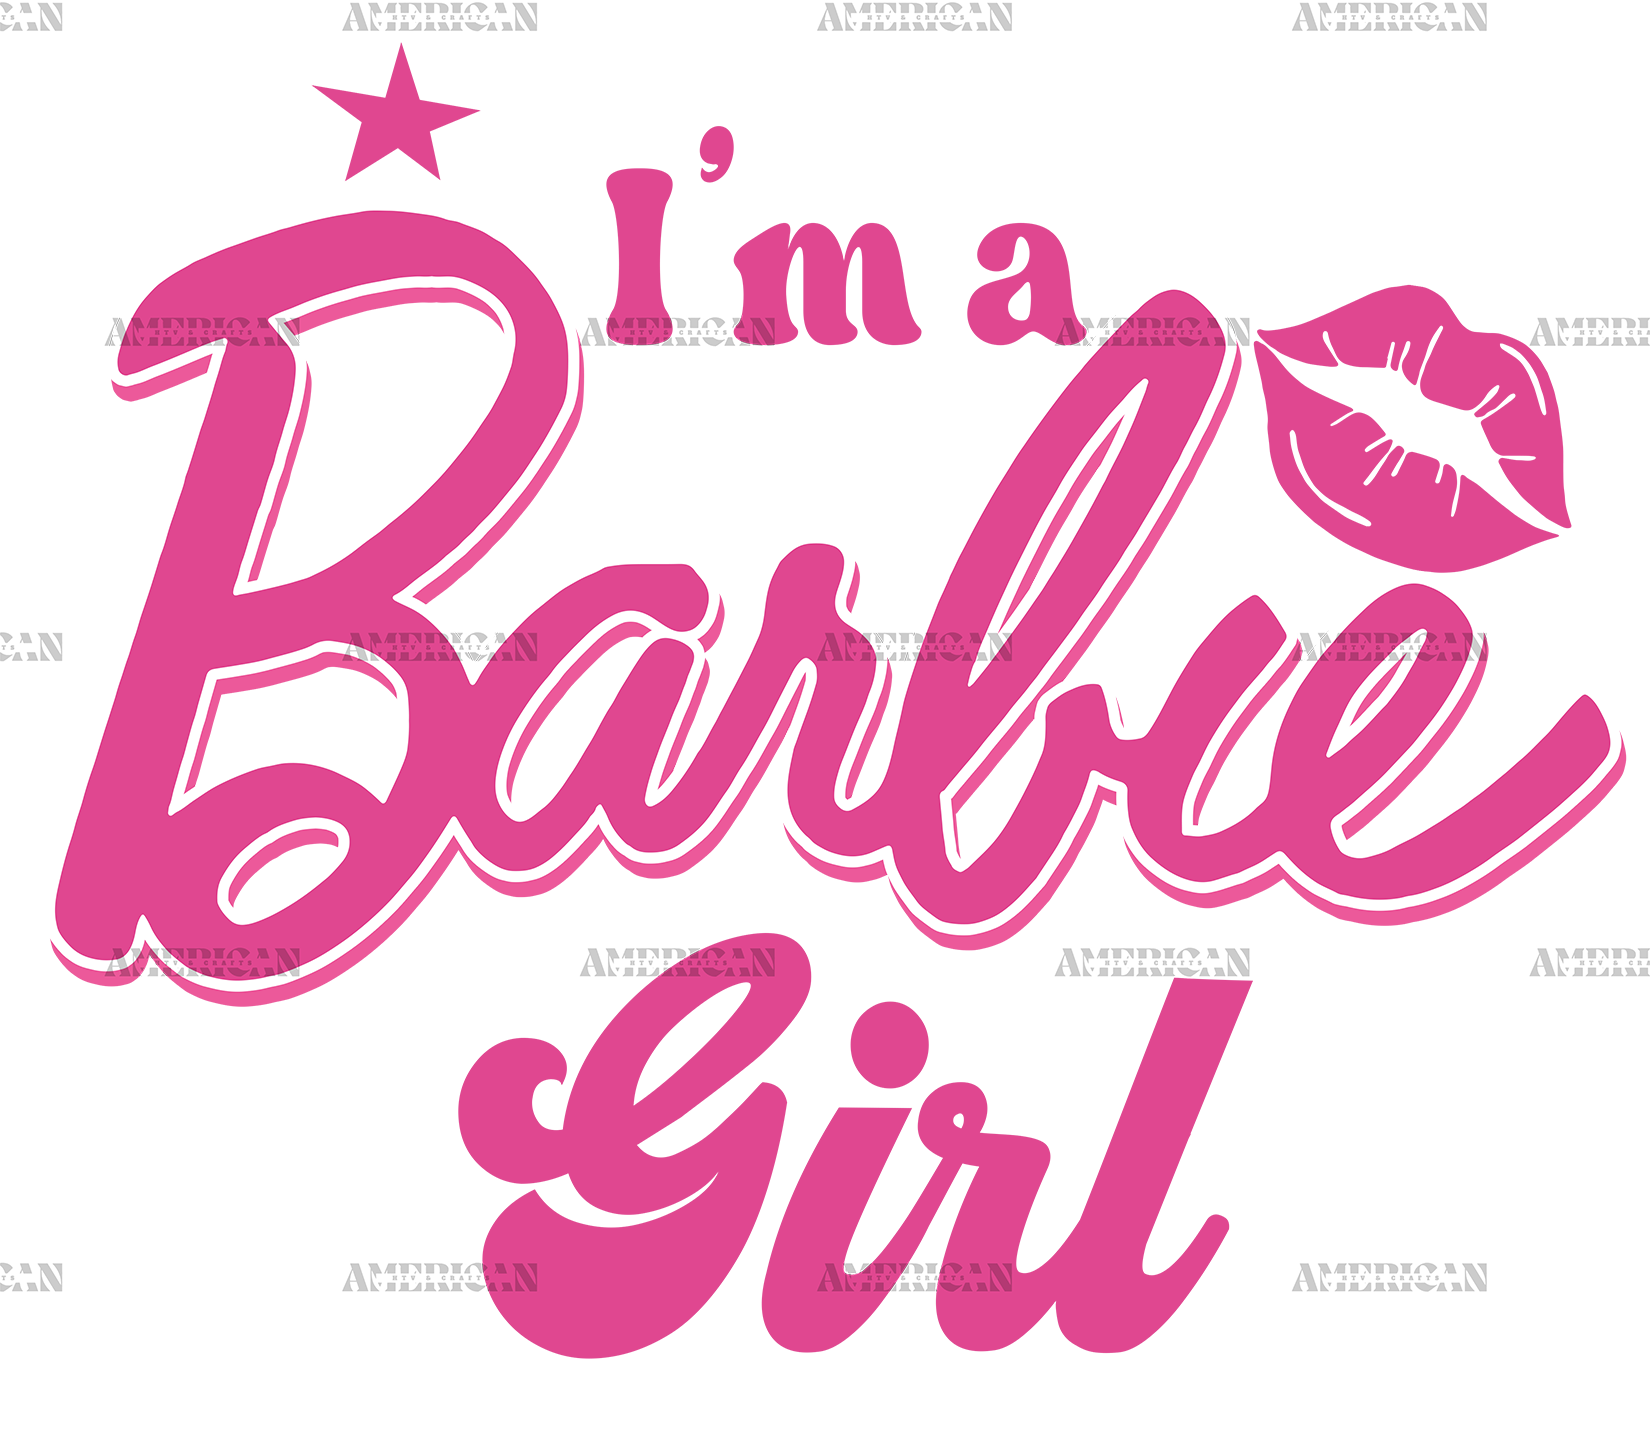 barbie logo wallpaper black and pink